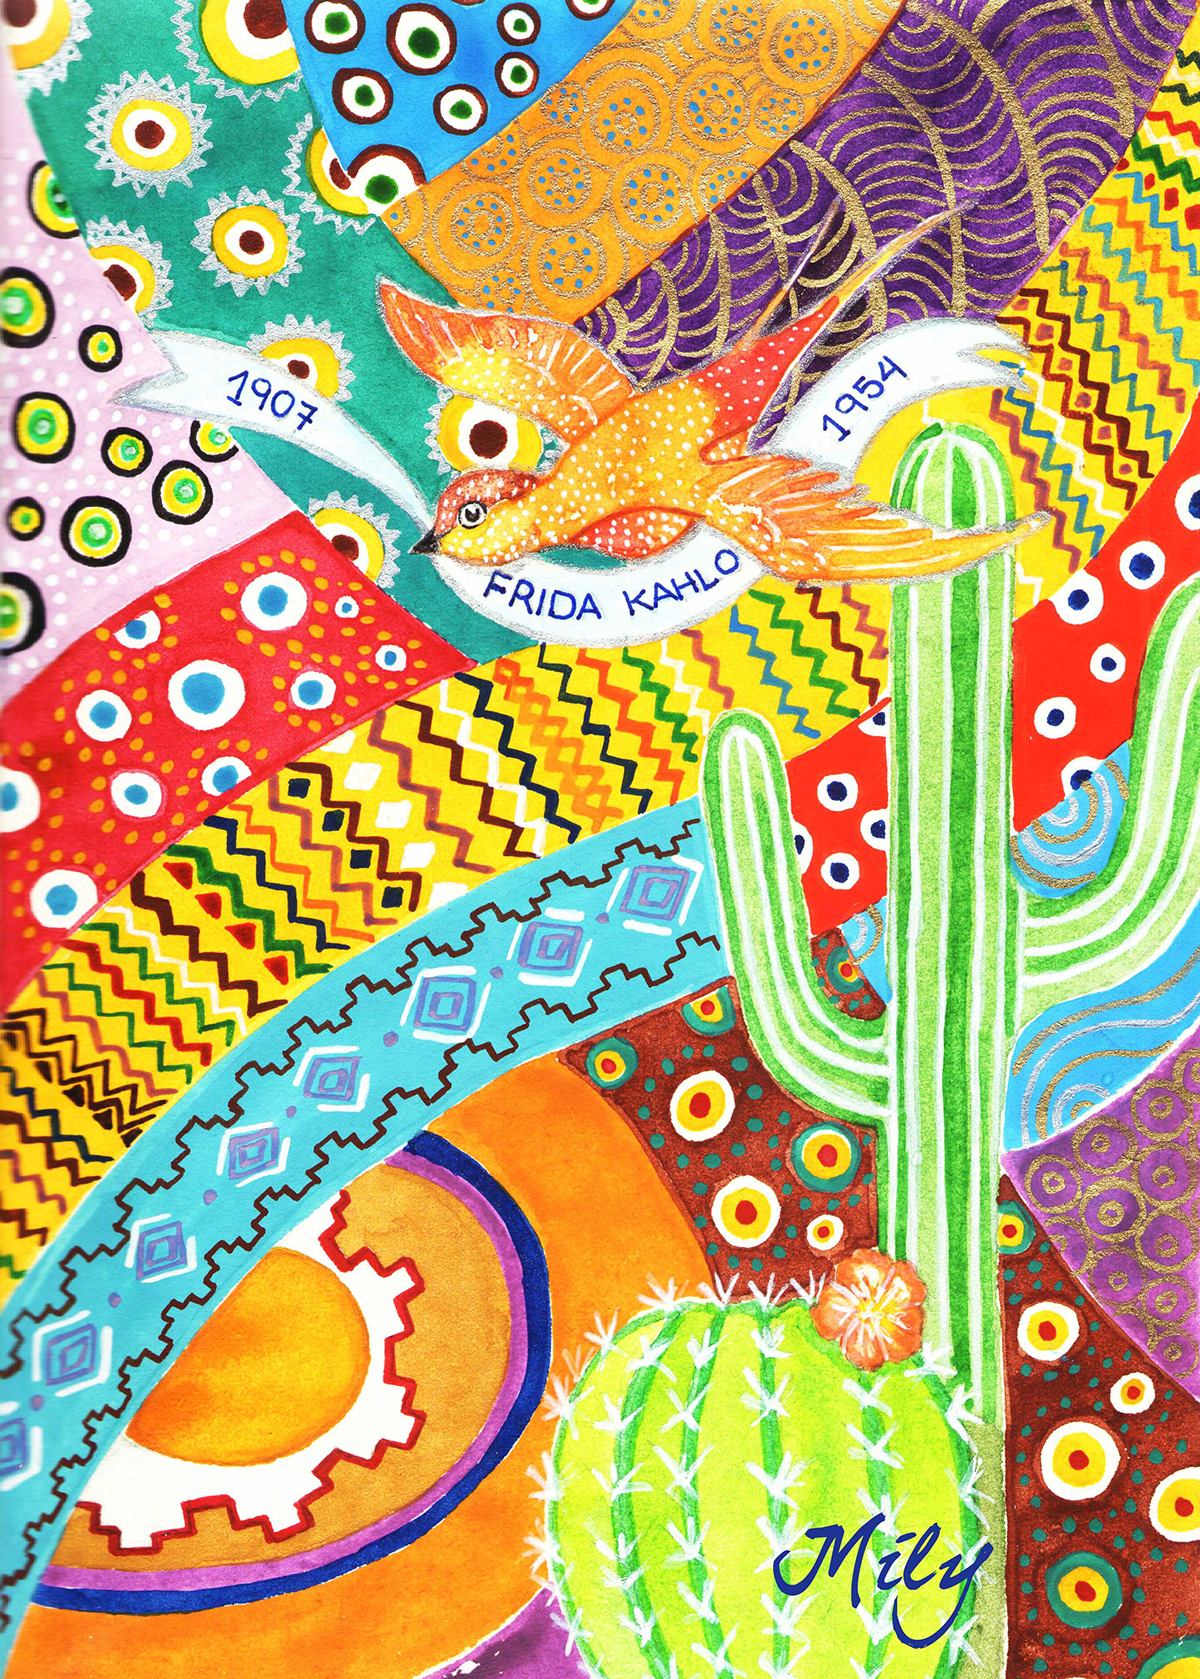 Illustrated book  pitayas captus Artist Journal Frida Kahlo tribute Patterns mexico Las Pitayas Book Bird Illustration published artwork  mily Universidad Autónoma Chapingo artis journal pages bird art